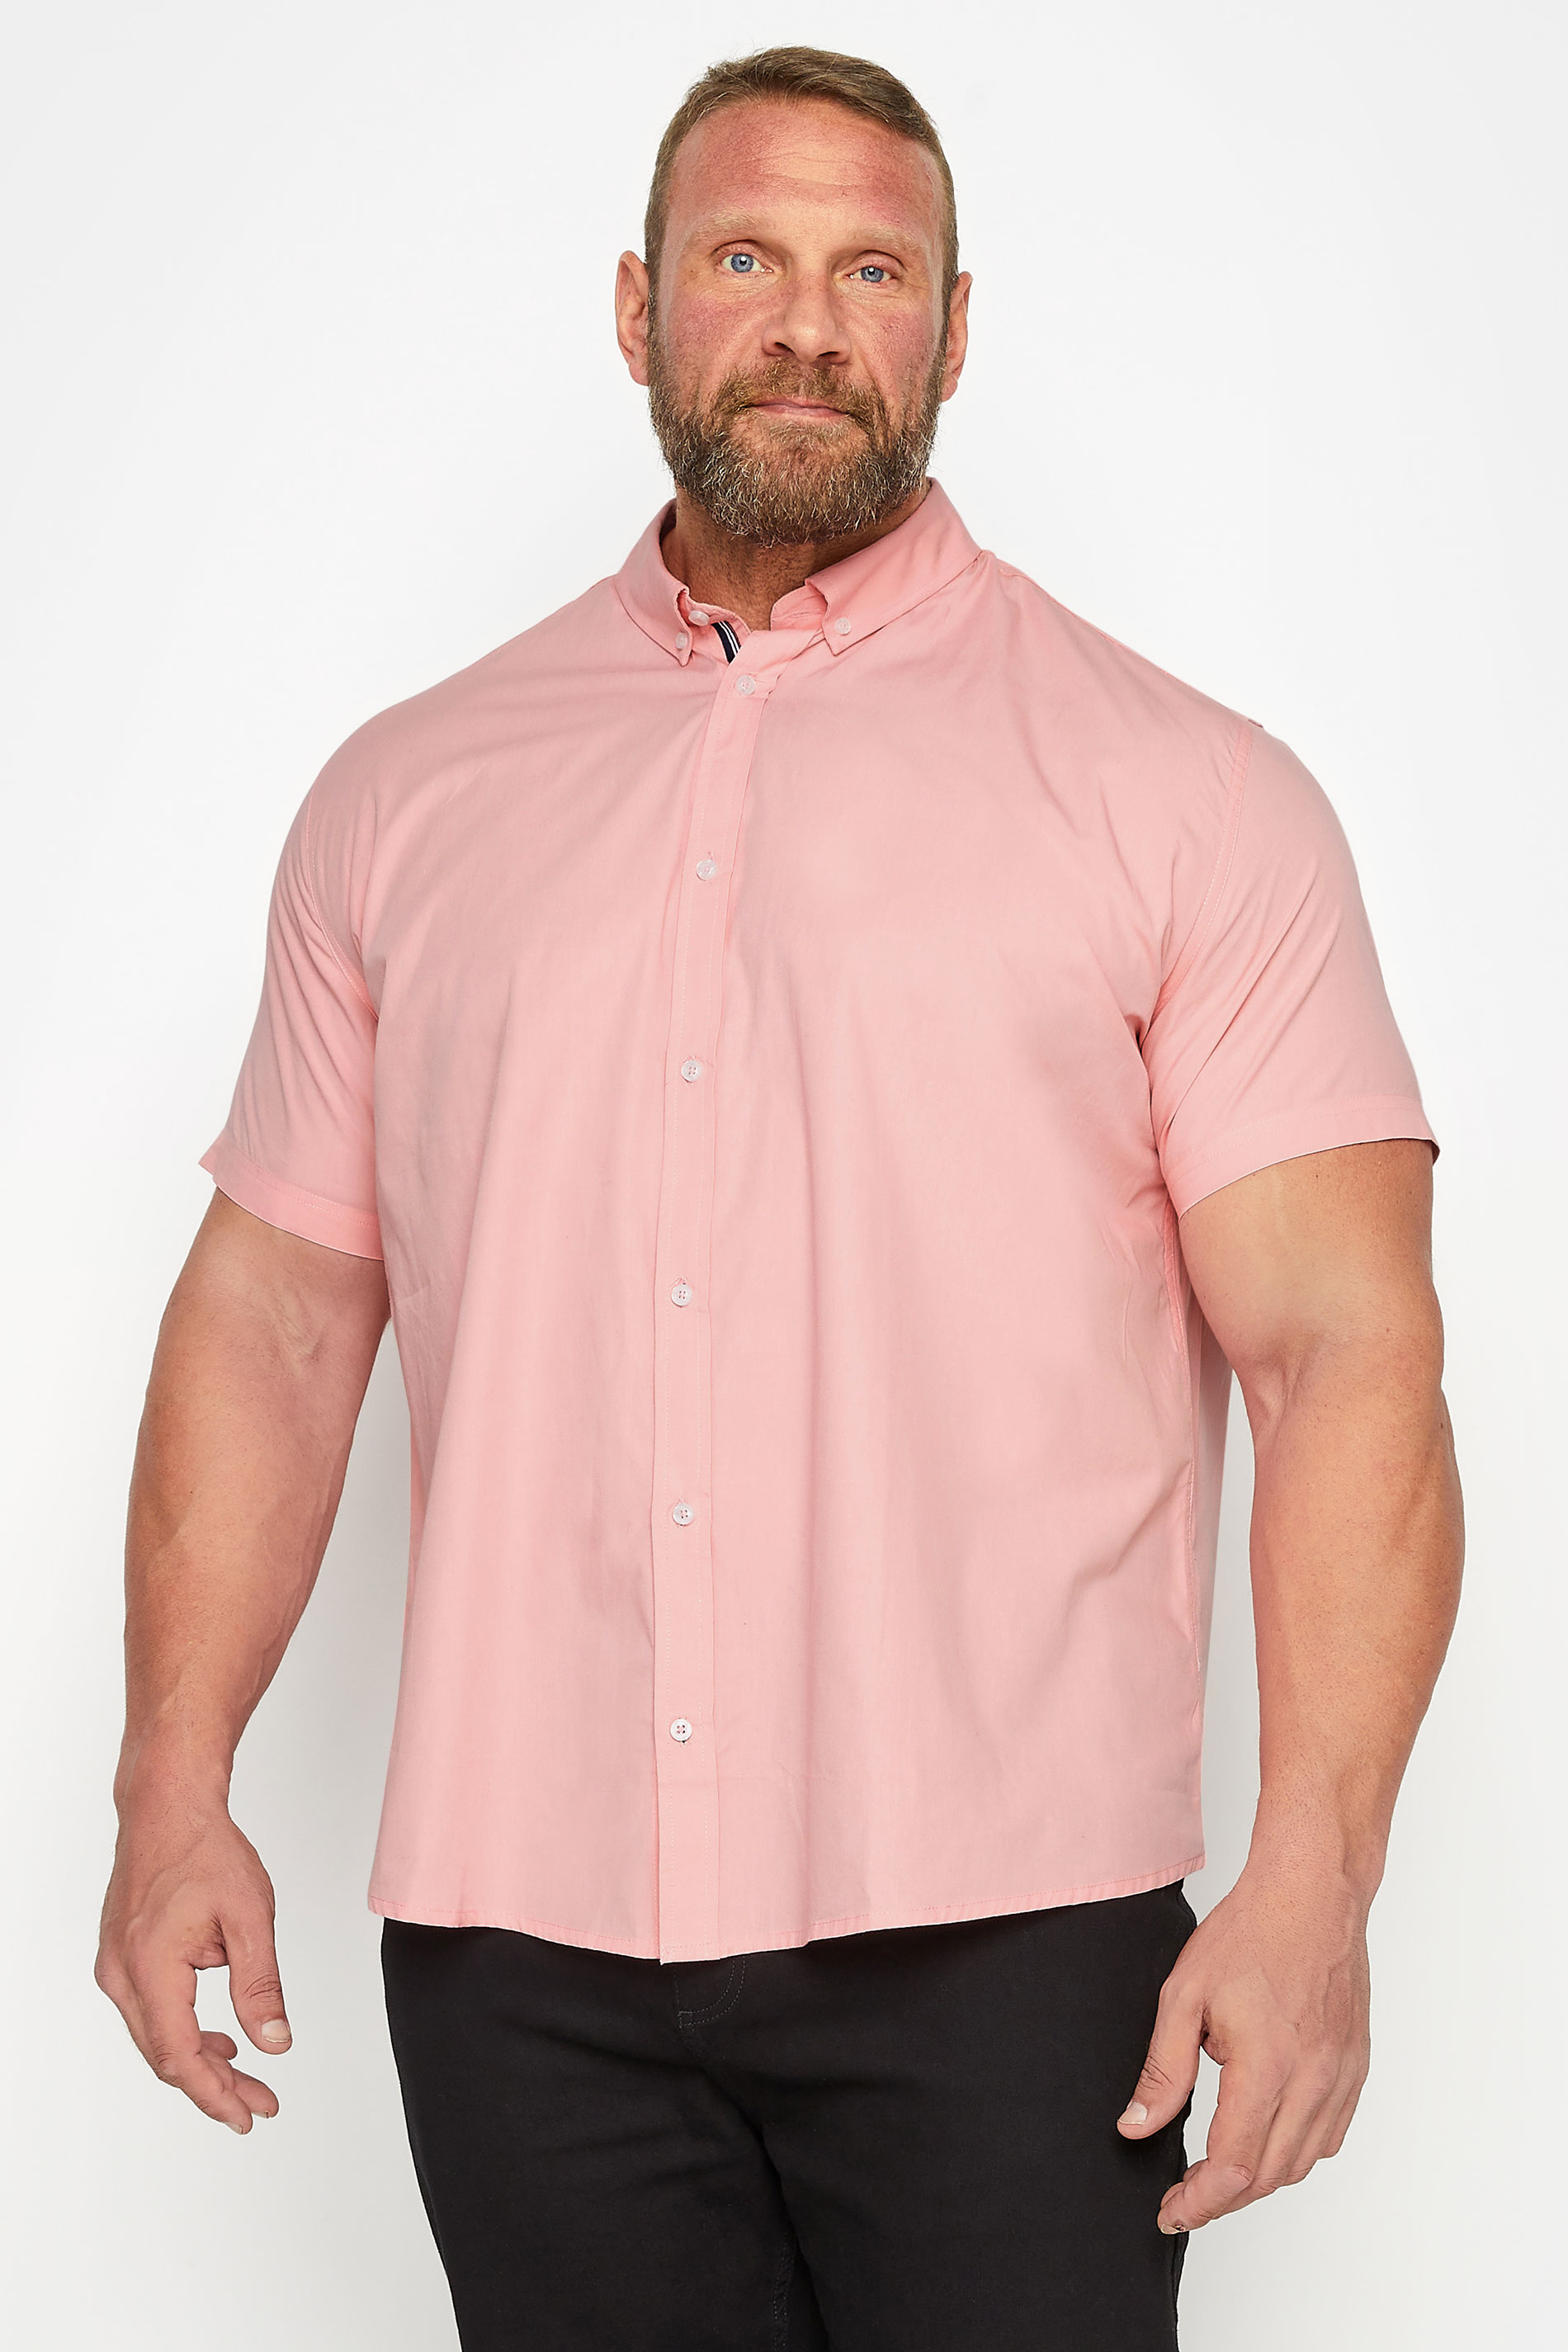 BadRhino Big & Tall Pink Poplin Shirt | BadRhino 1